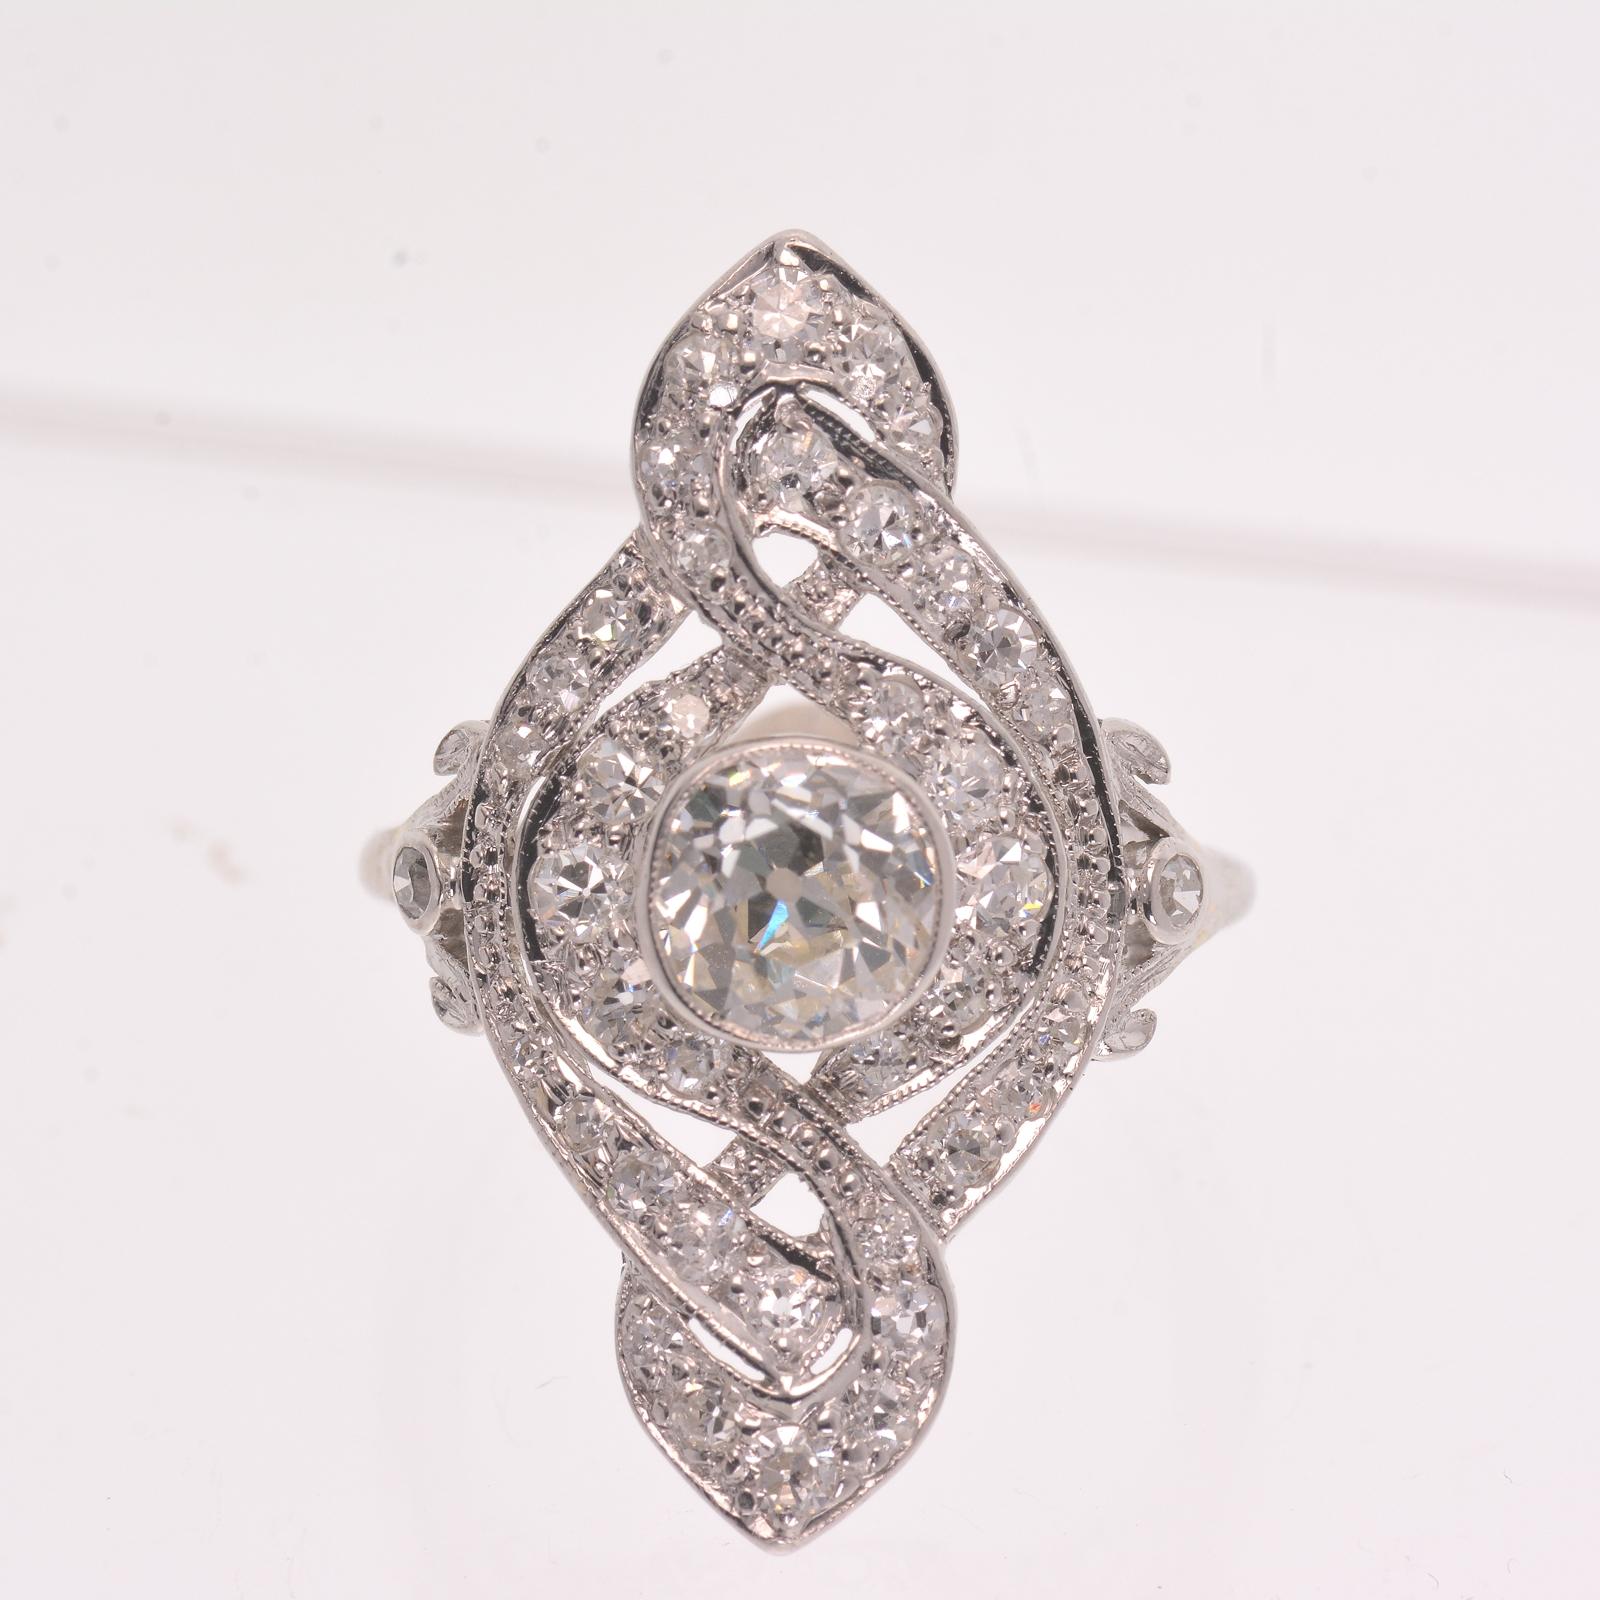 Antique Edwardian Platinum Old Mine Cut 1.62 tcw Diamond Ring

Period:
(Antique) Edwardian c1901-1910
Metal:
Platinum
Stones:
Natural Diamond 1.62 tcw 
Center Stone Weight:
.97
Diamond Color:
K
Diamond Clarity:
SI1
Diamond Cut:
Old Mine Cut 
Total